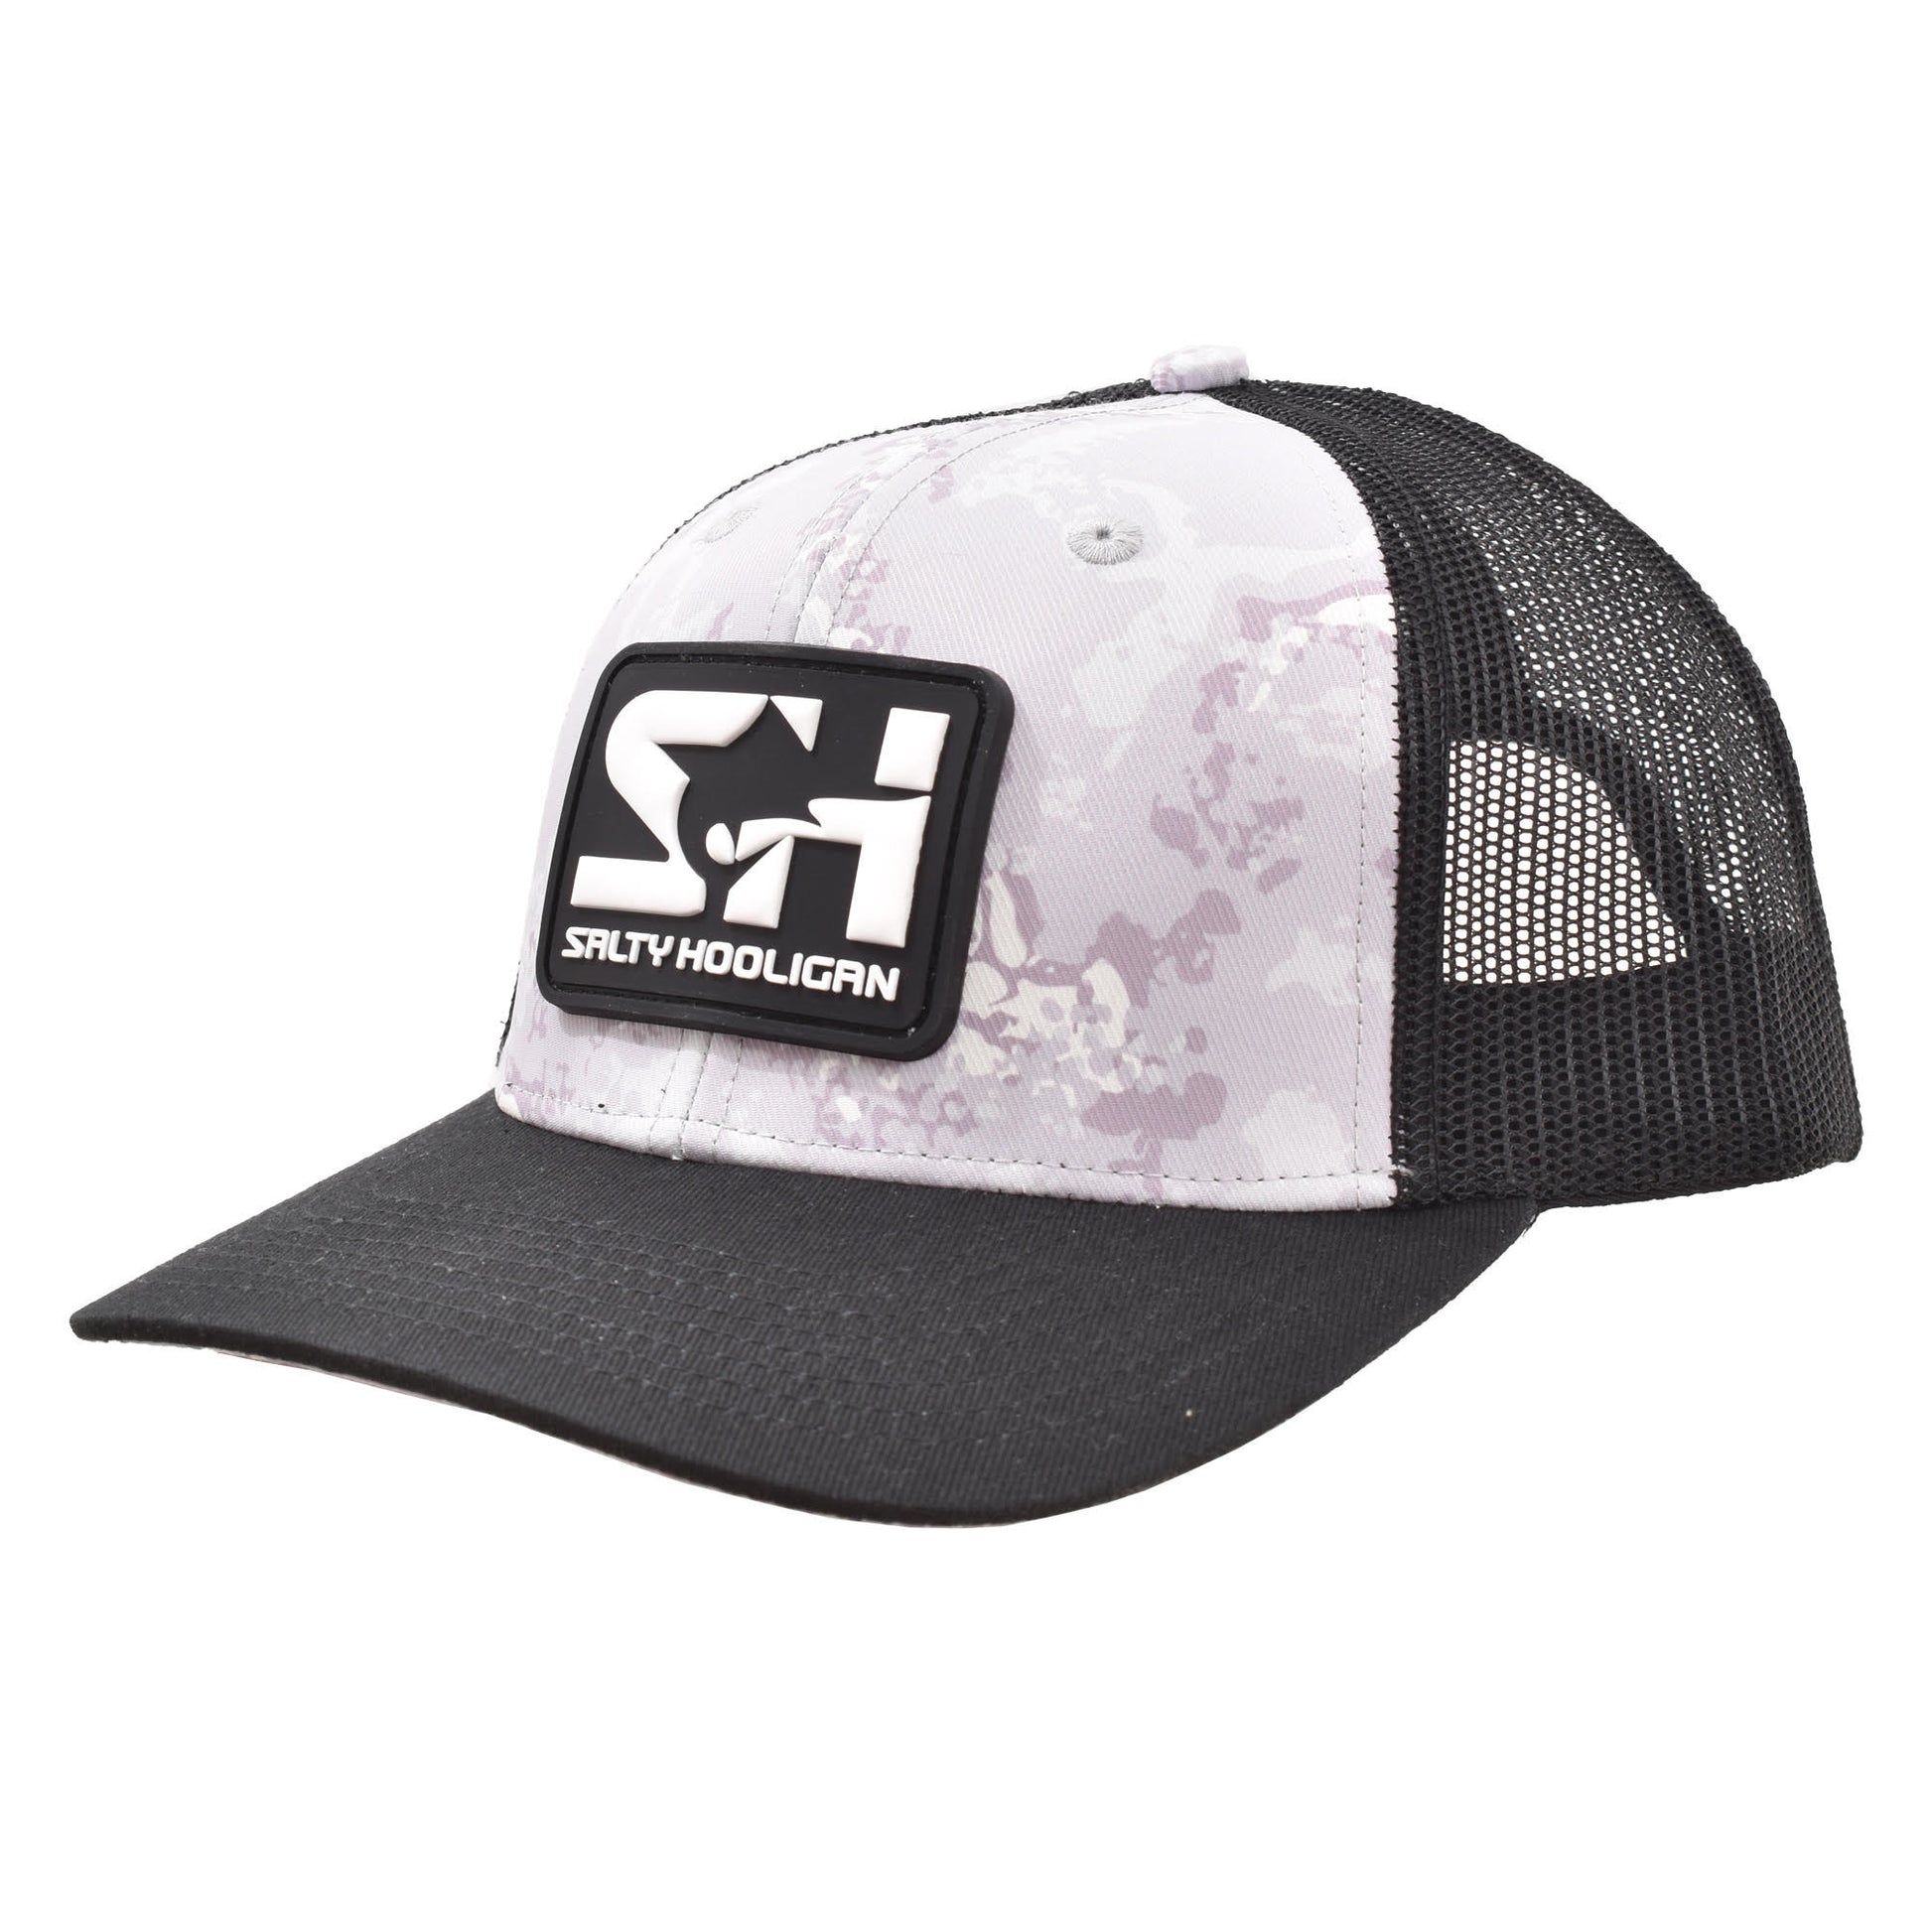 Salt Life Rod & Gun Club Trucker Hat Grey Camo / One Size